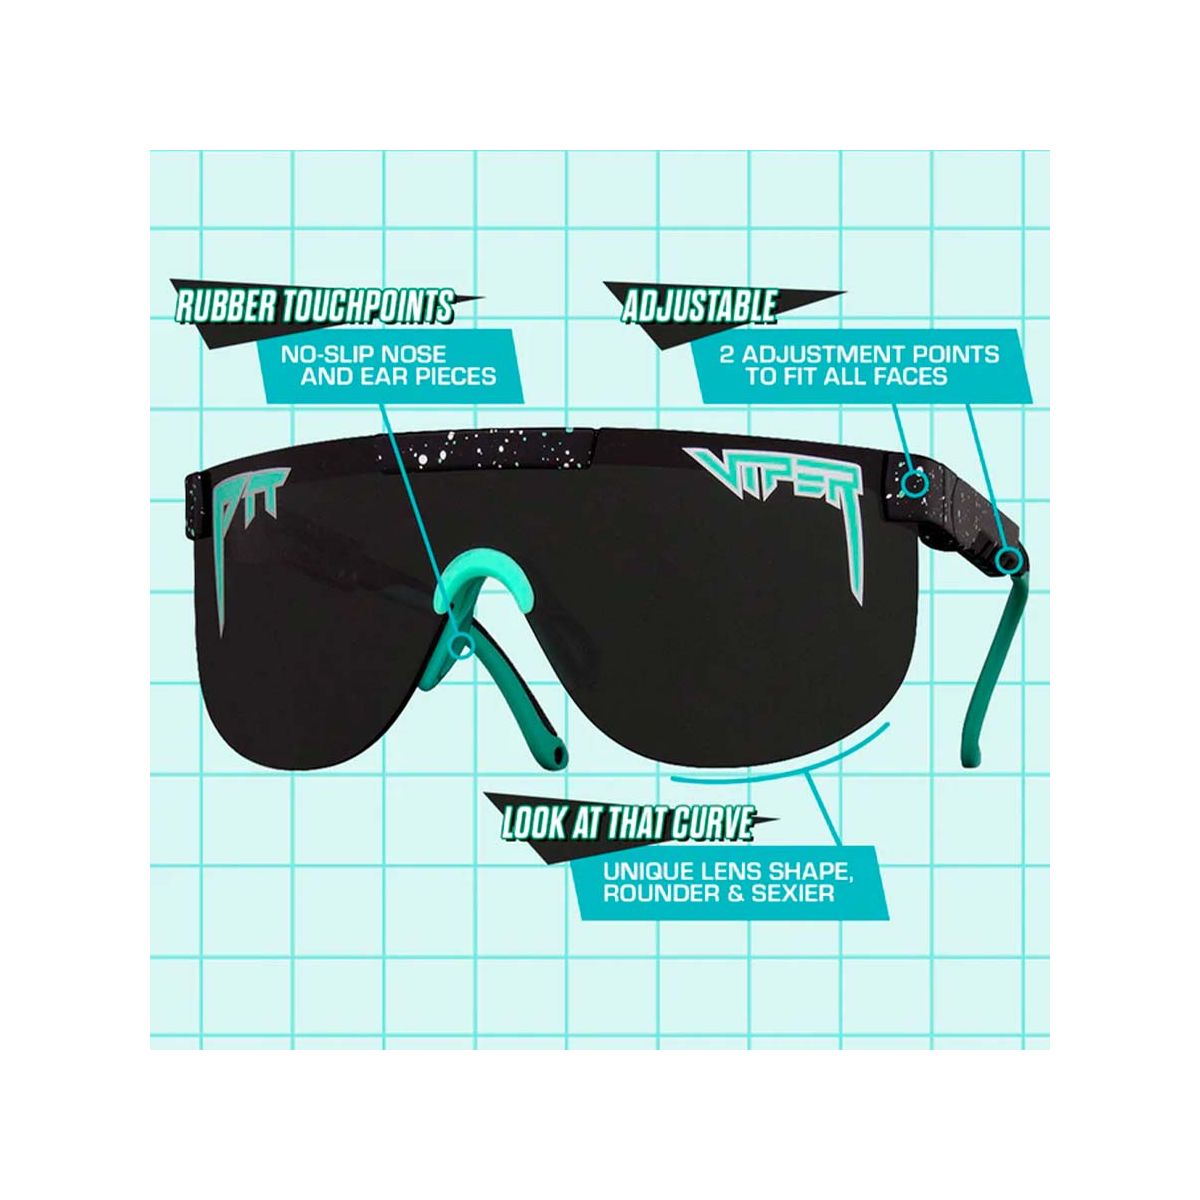 Gafas de sol Pit Viper The Thundermint elliptical con cristal ahumado en color negro y azul